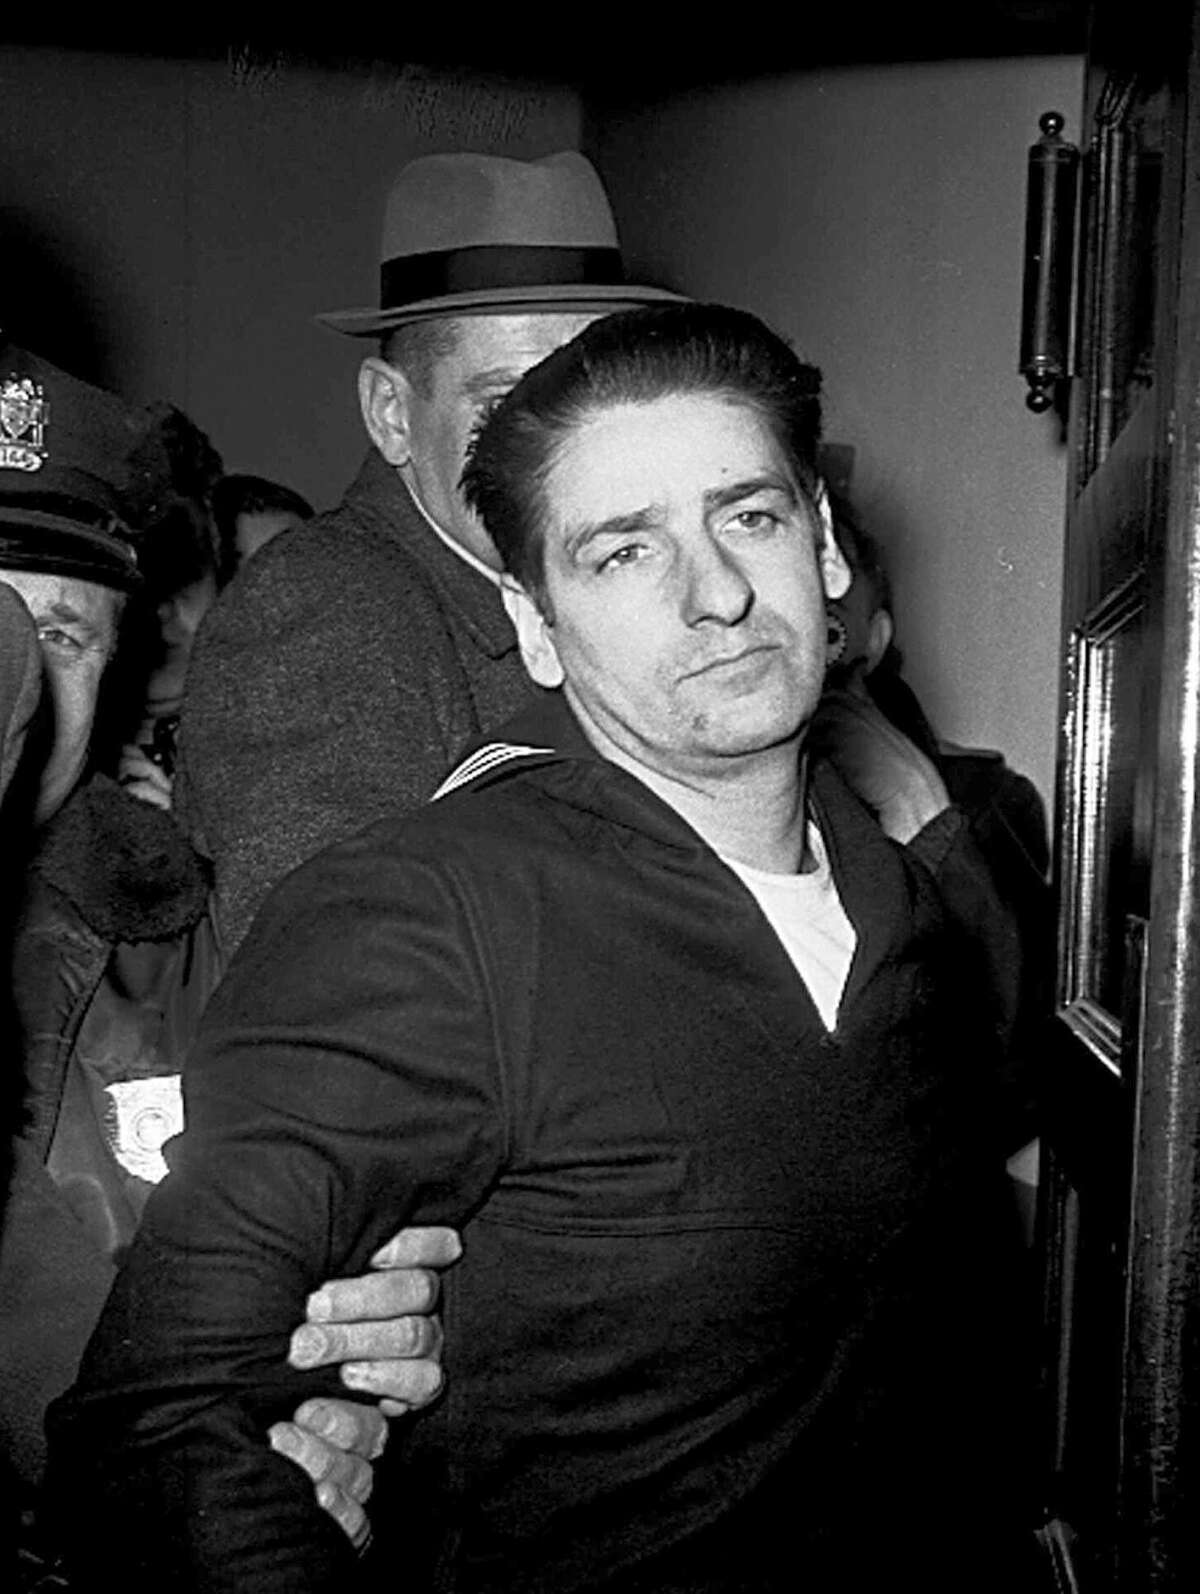 Self-confessed Boston Strangler Albert DeSalvo is shown after his capture in Boston in 1967.